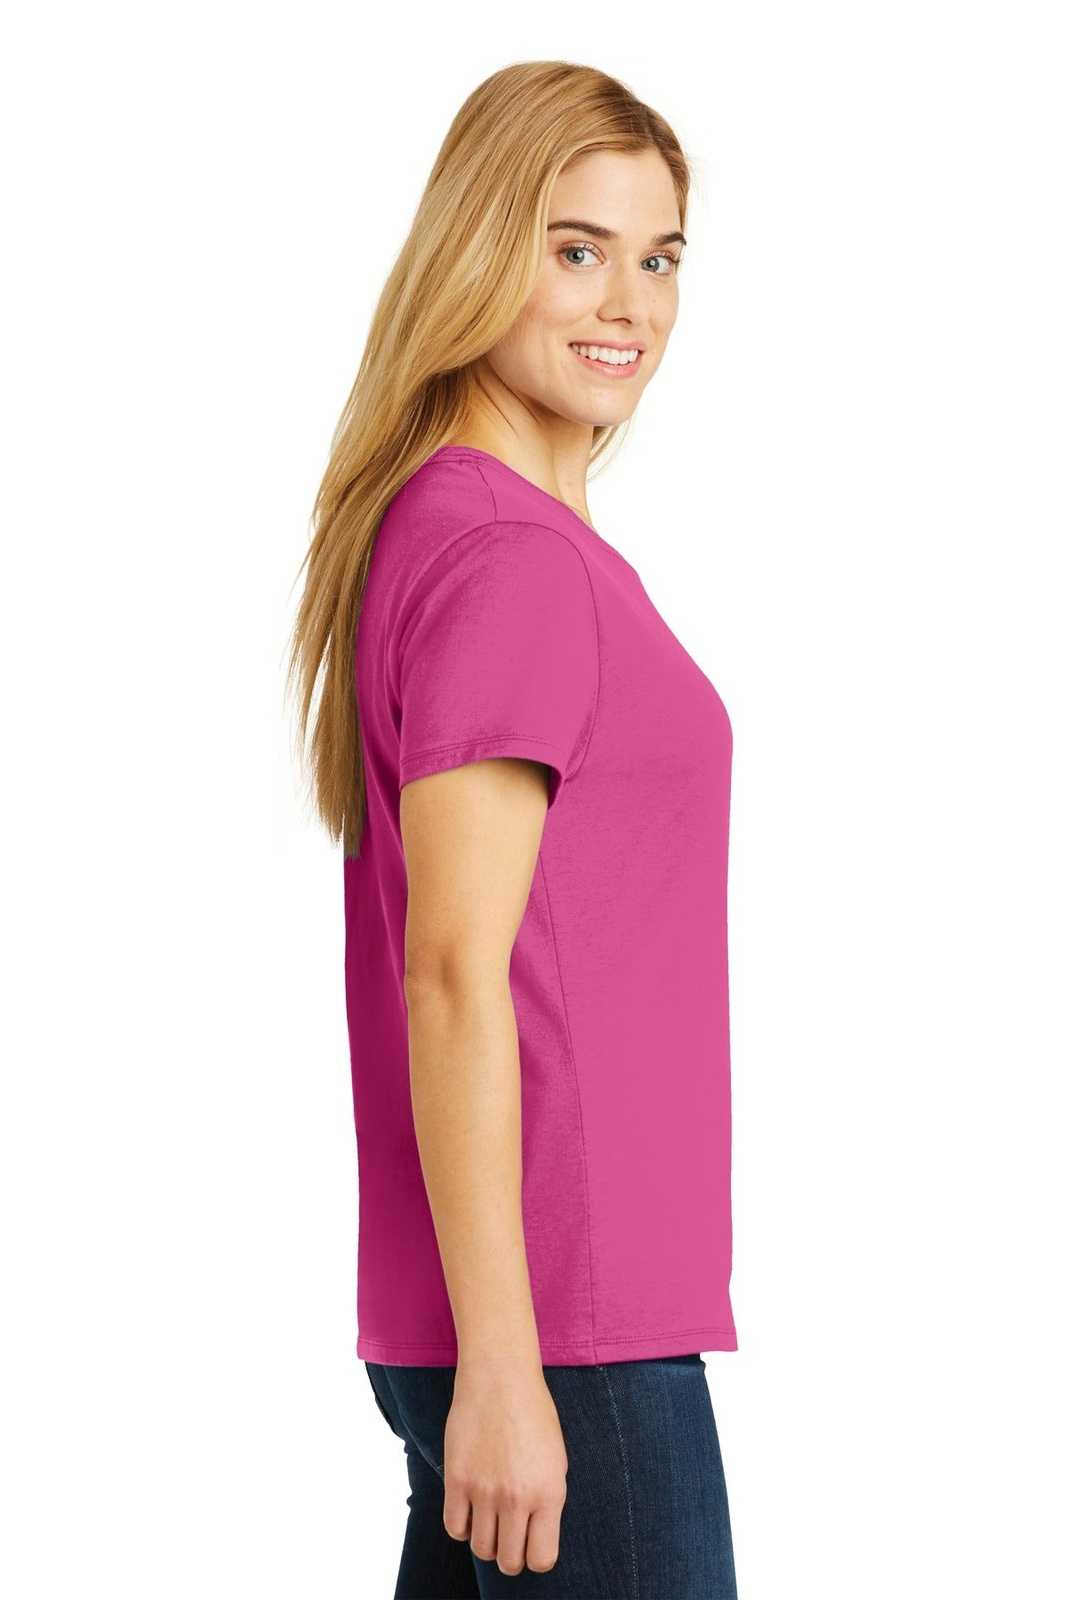 Hanes SL04 Ladies Nano-T Cotton T-Shirt - Wow Pink - HIT a Double